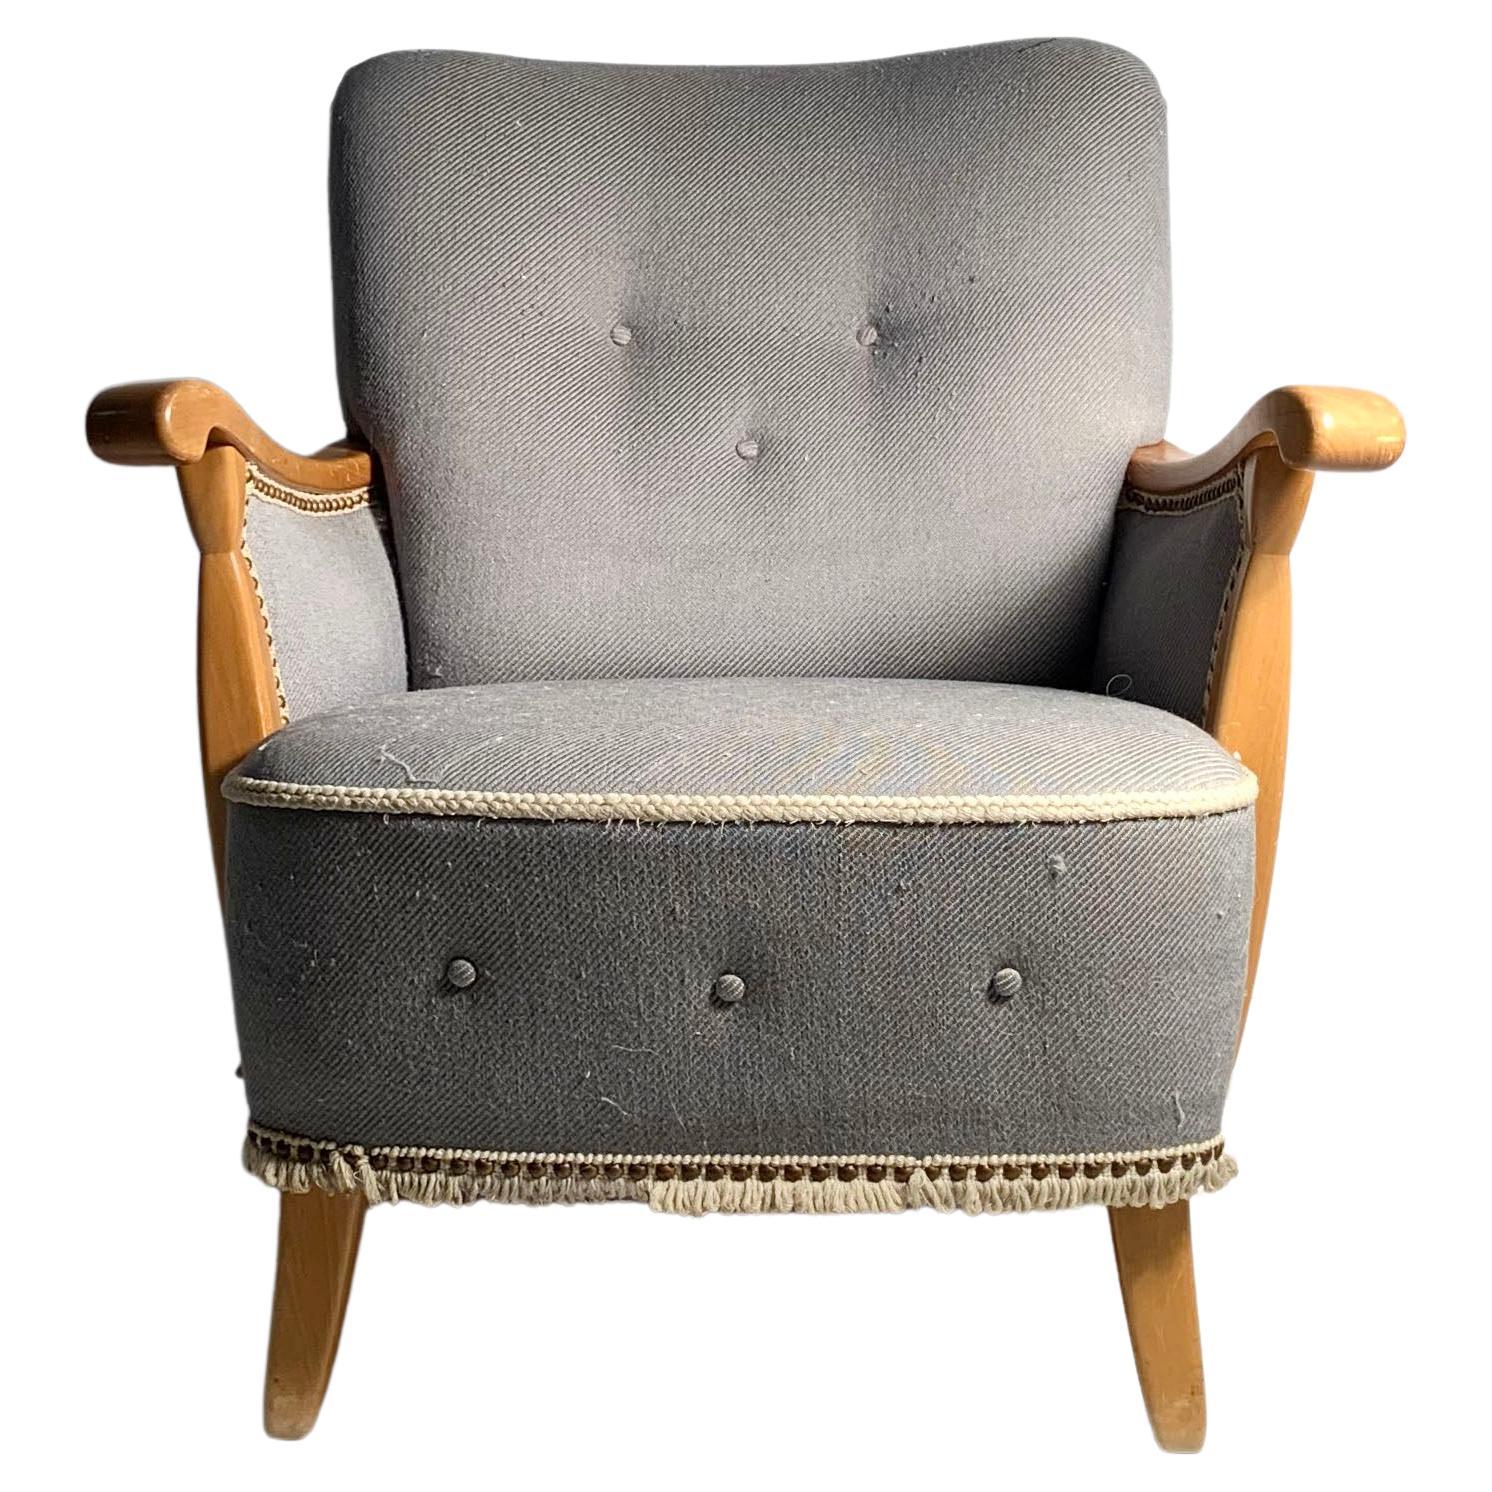 Vintage 1940s Swedish Lounge Chair